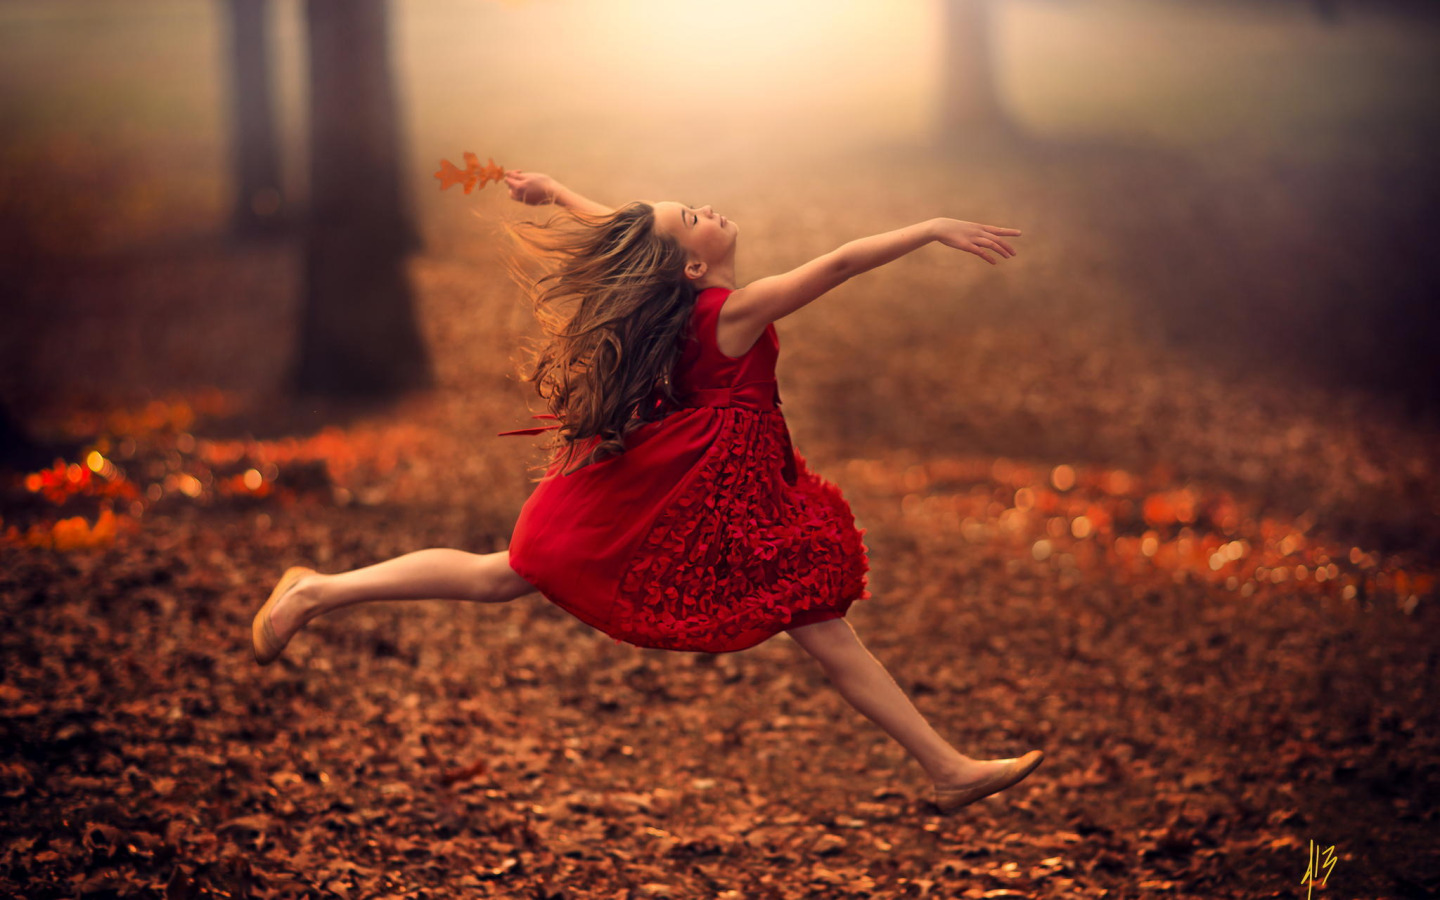 Джейк Олсон (Jake Olson), США. Девушка танцует. Девушка бежит в платье. Девушка танцует осень. Танцами добрыми песнями